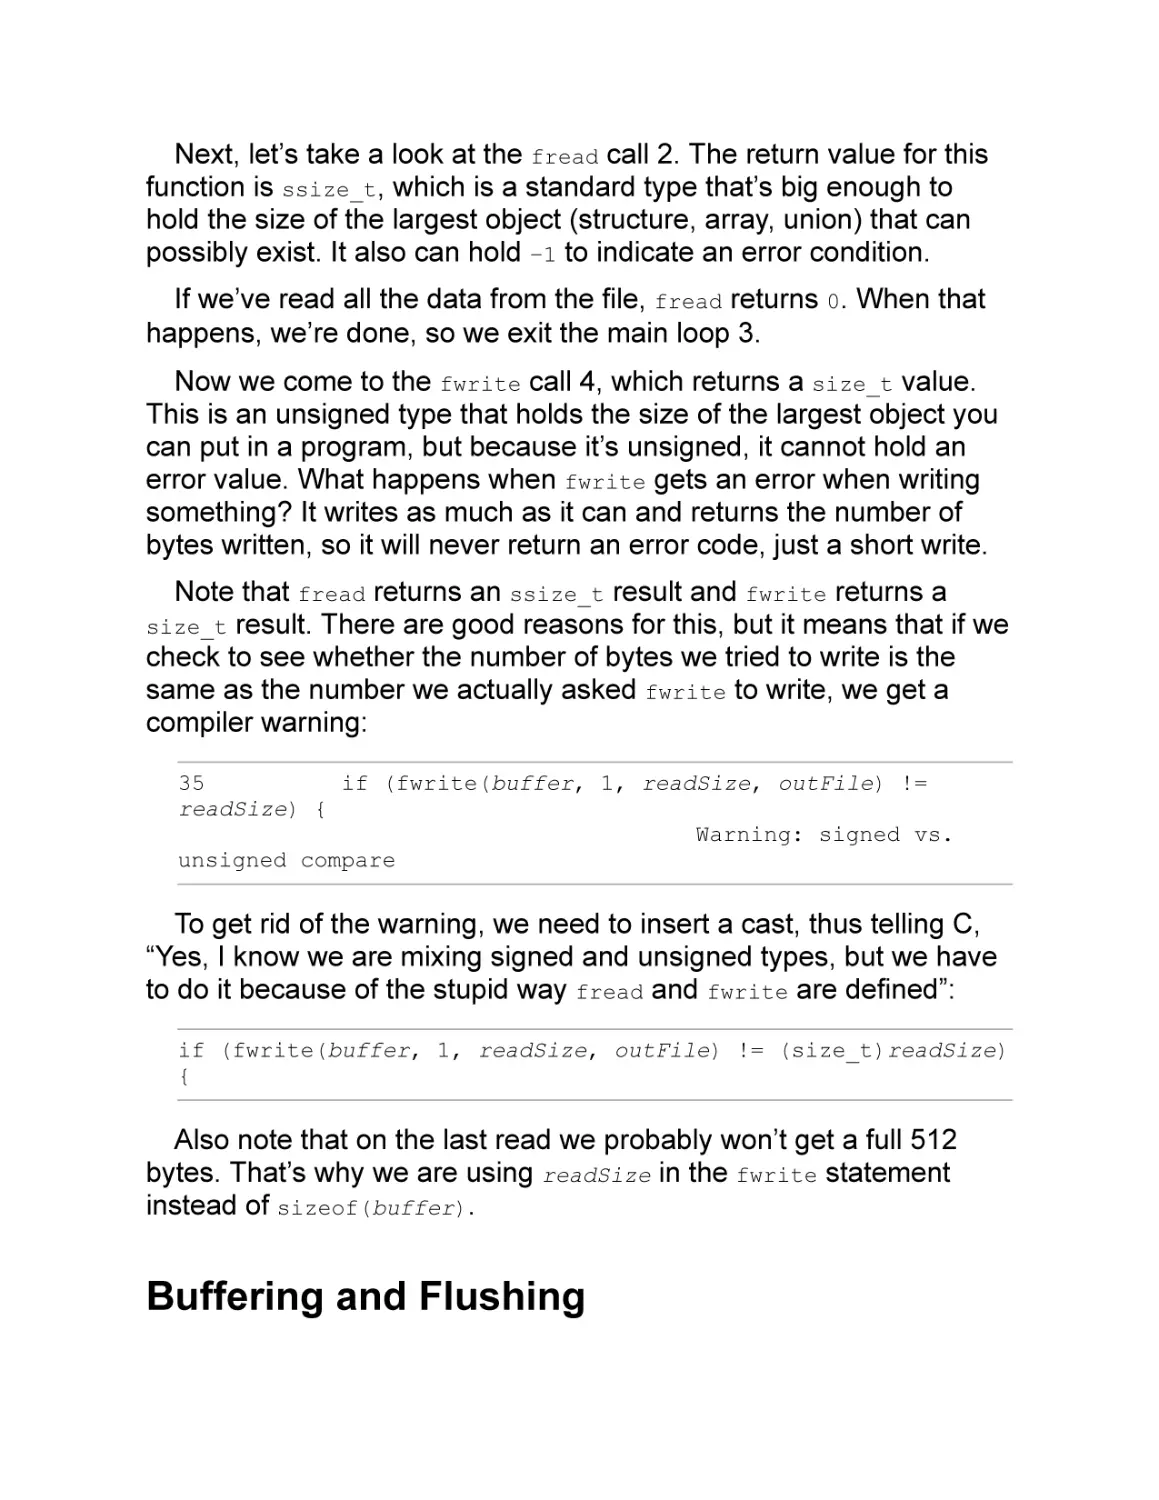 Buffering and Flushing